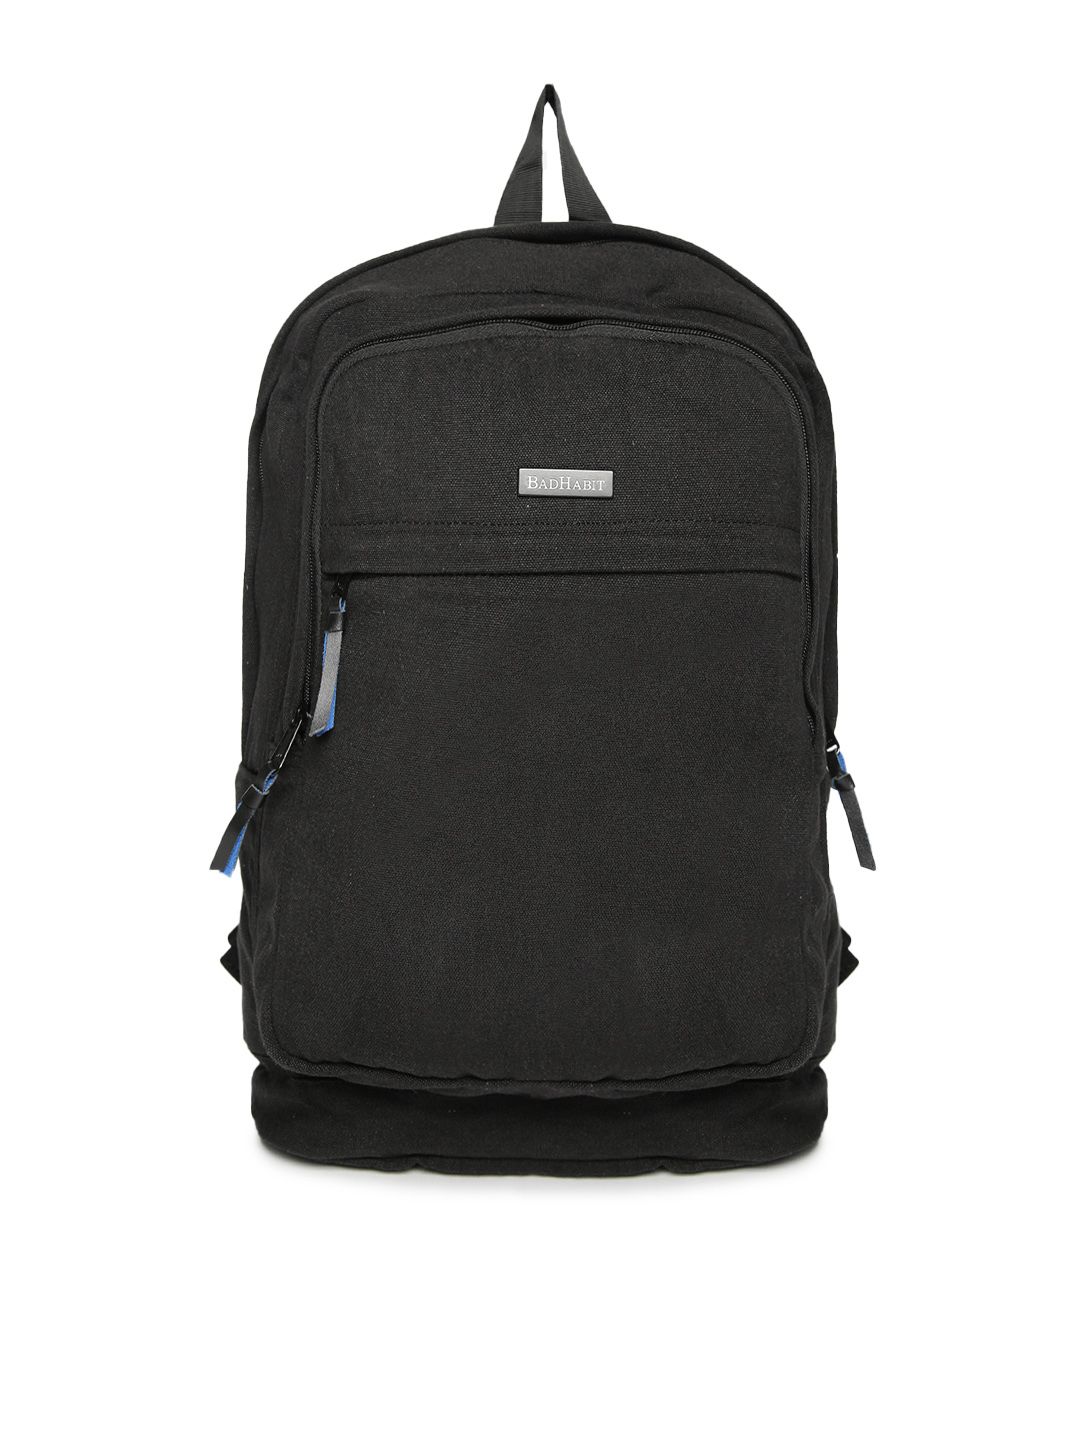 BAD HABIT Unisex Black Solid Backpack Price in India